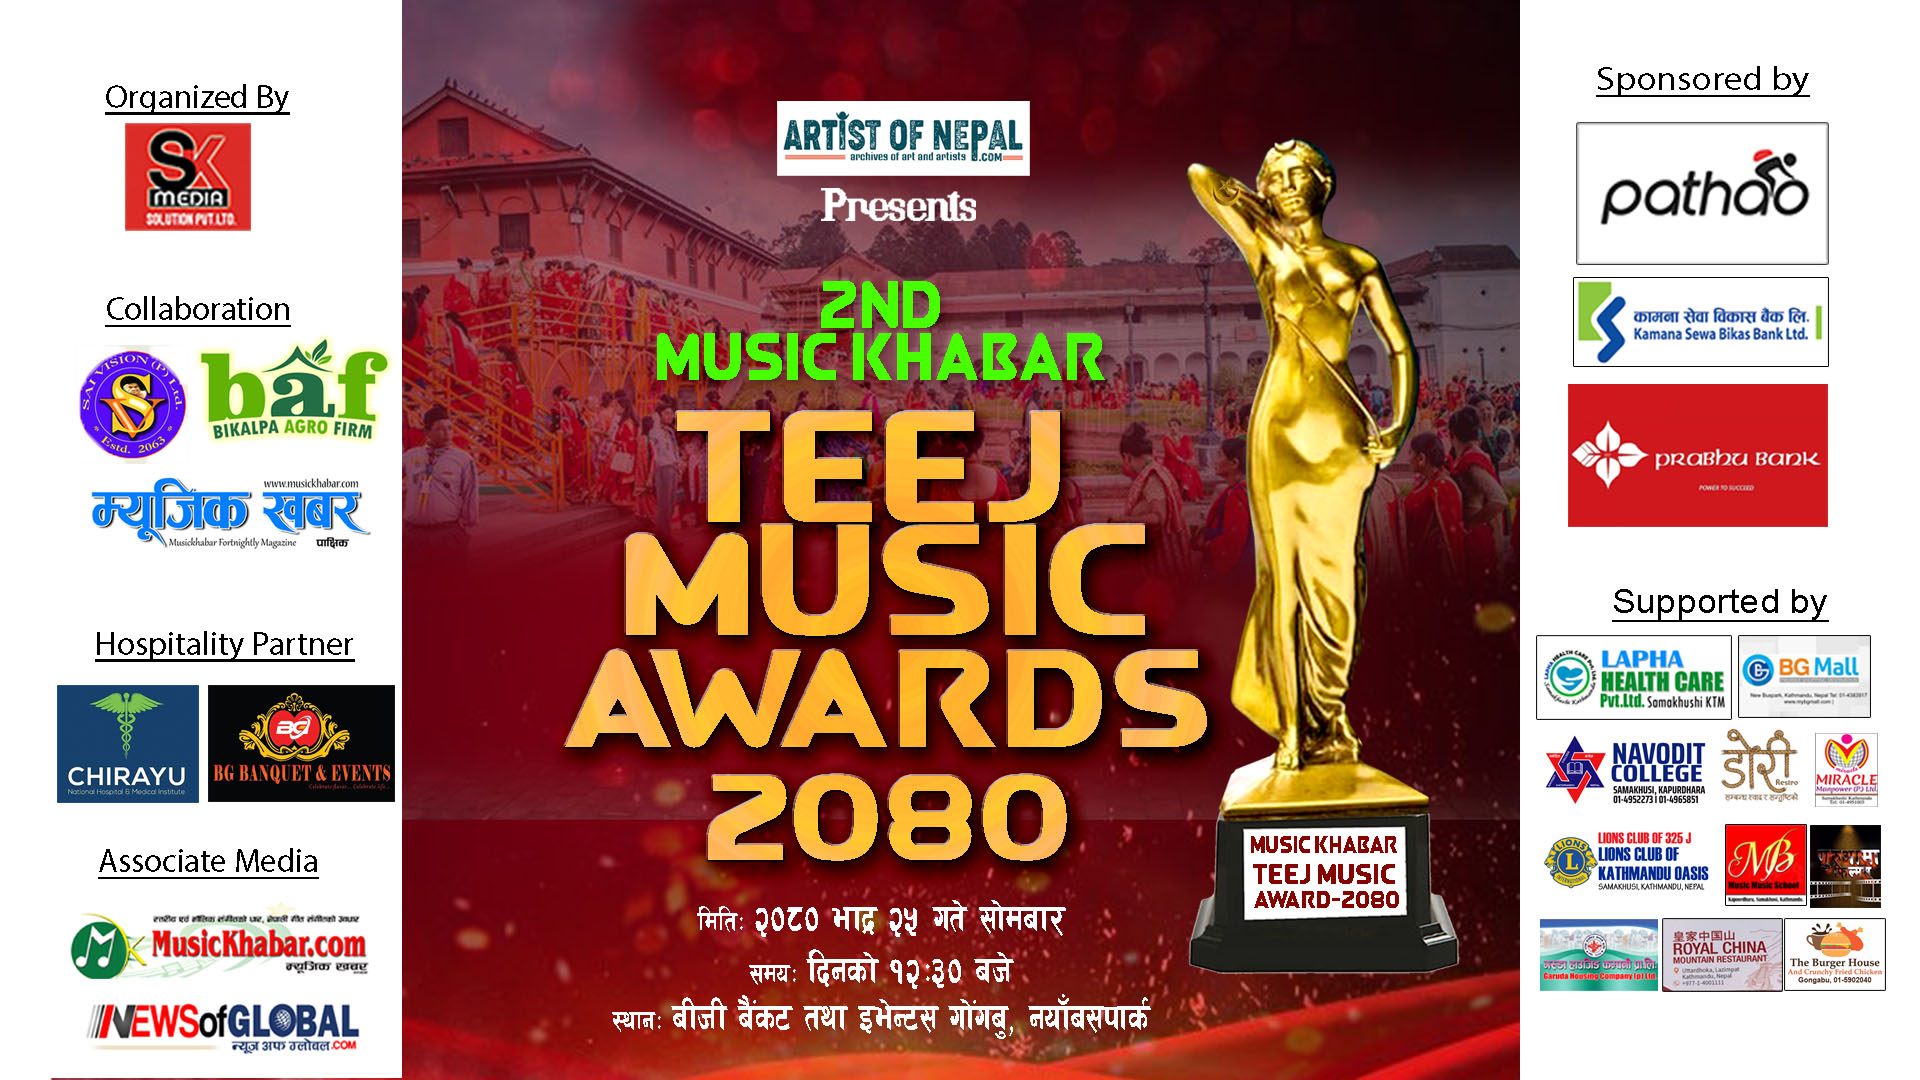 Shiva Shakti Teej Music Award Change to Name Music Khabar Teej Music Award